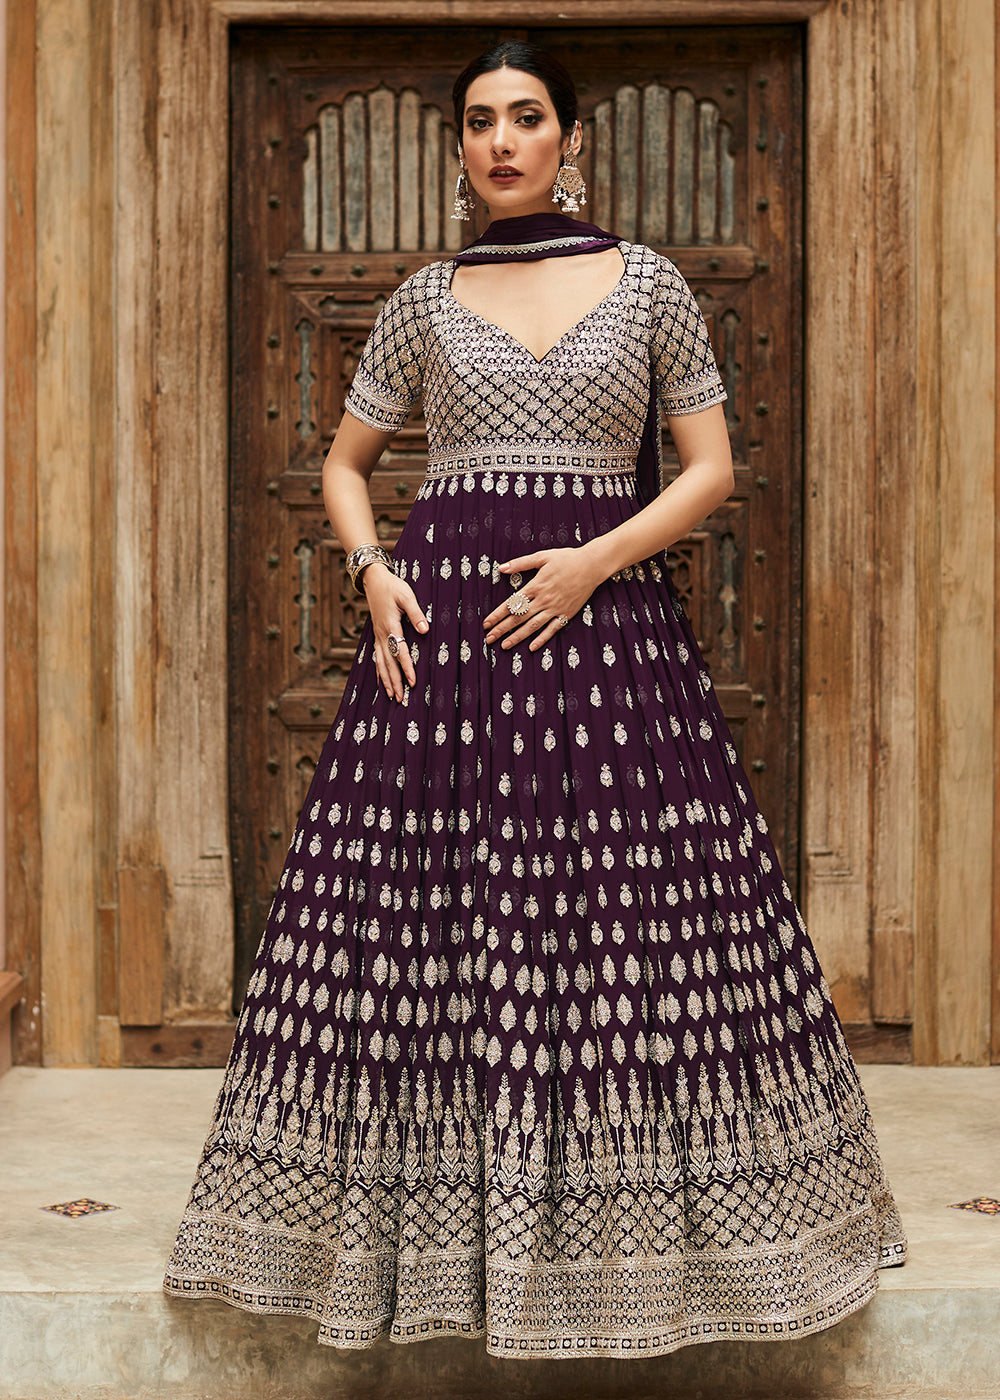 Buy Now Premium Georgette Plum Purple Embellished Anarkali Dress Online in USA, UK, Australia, New Zealand, Canada & Worldwide at Empress Clothing.